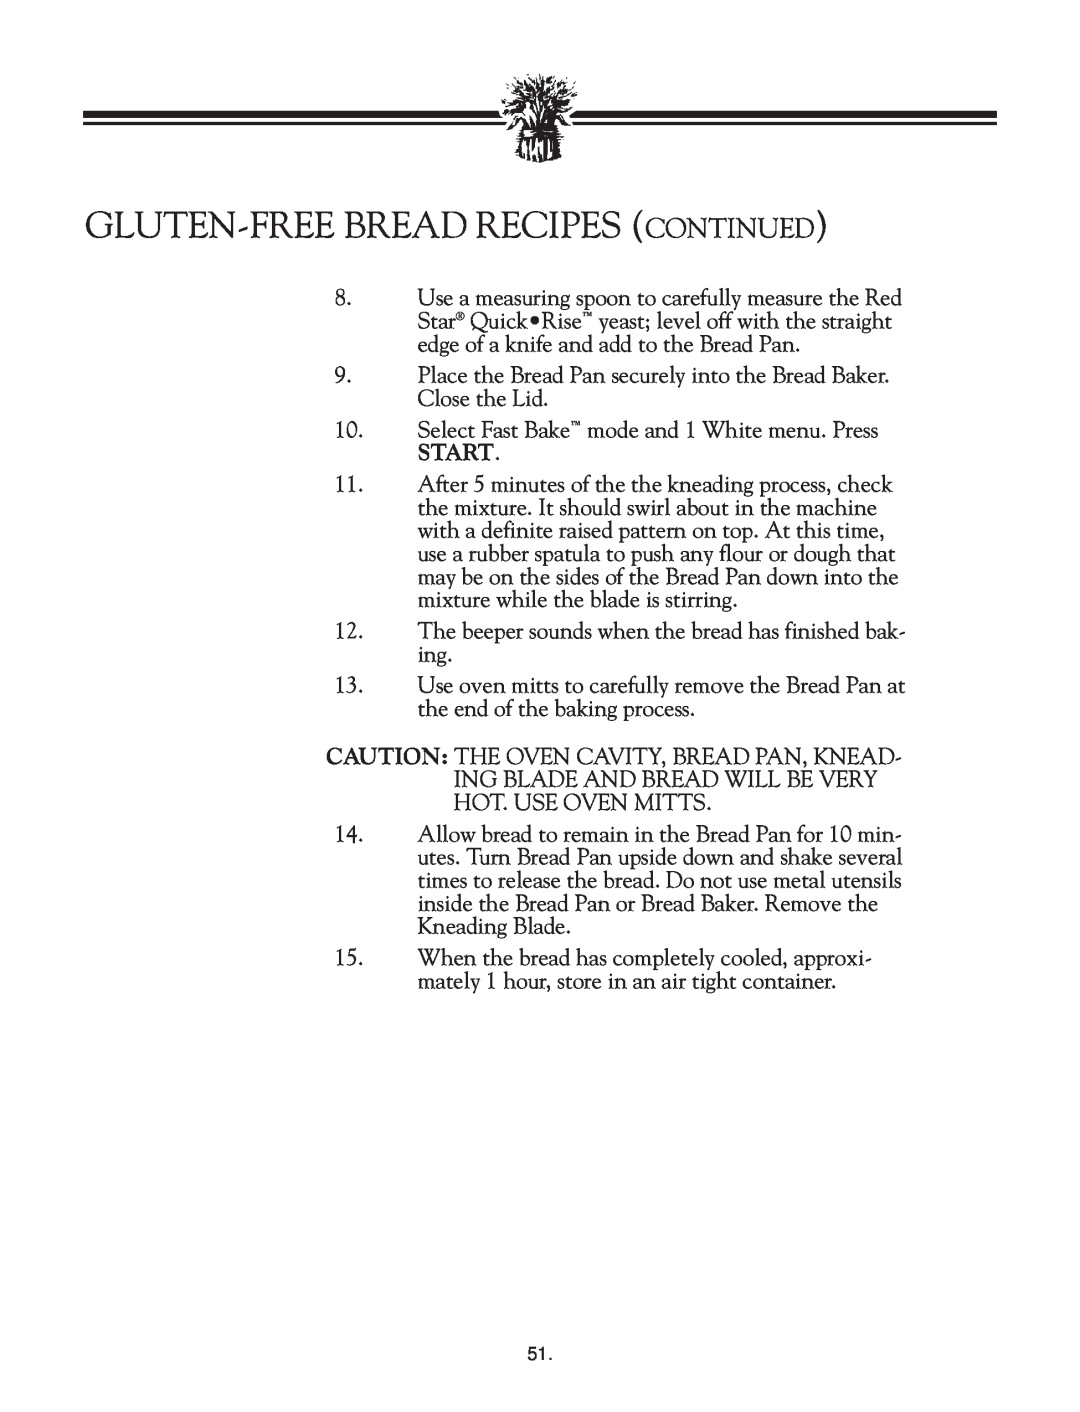 Breadman TR2828G instruction manual Gluten-Freebread Recipes Continued, Start 